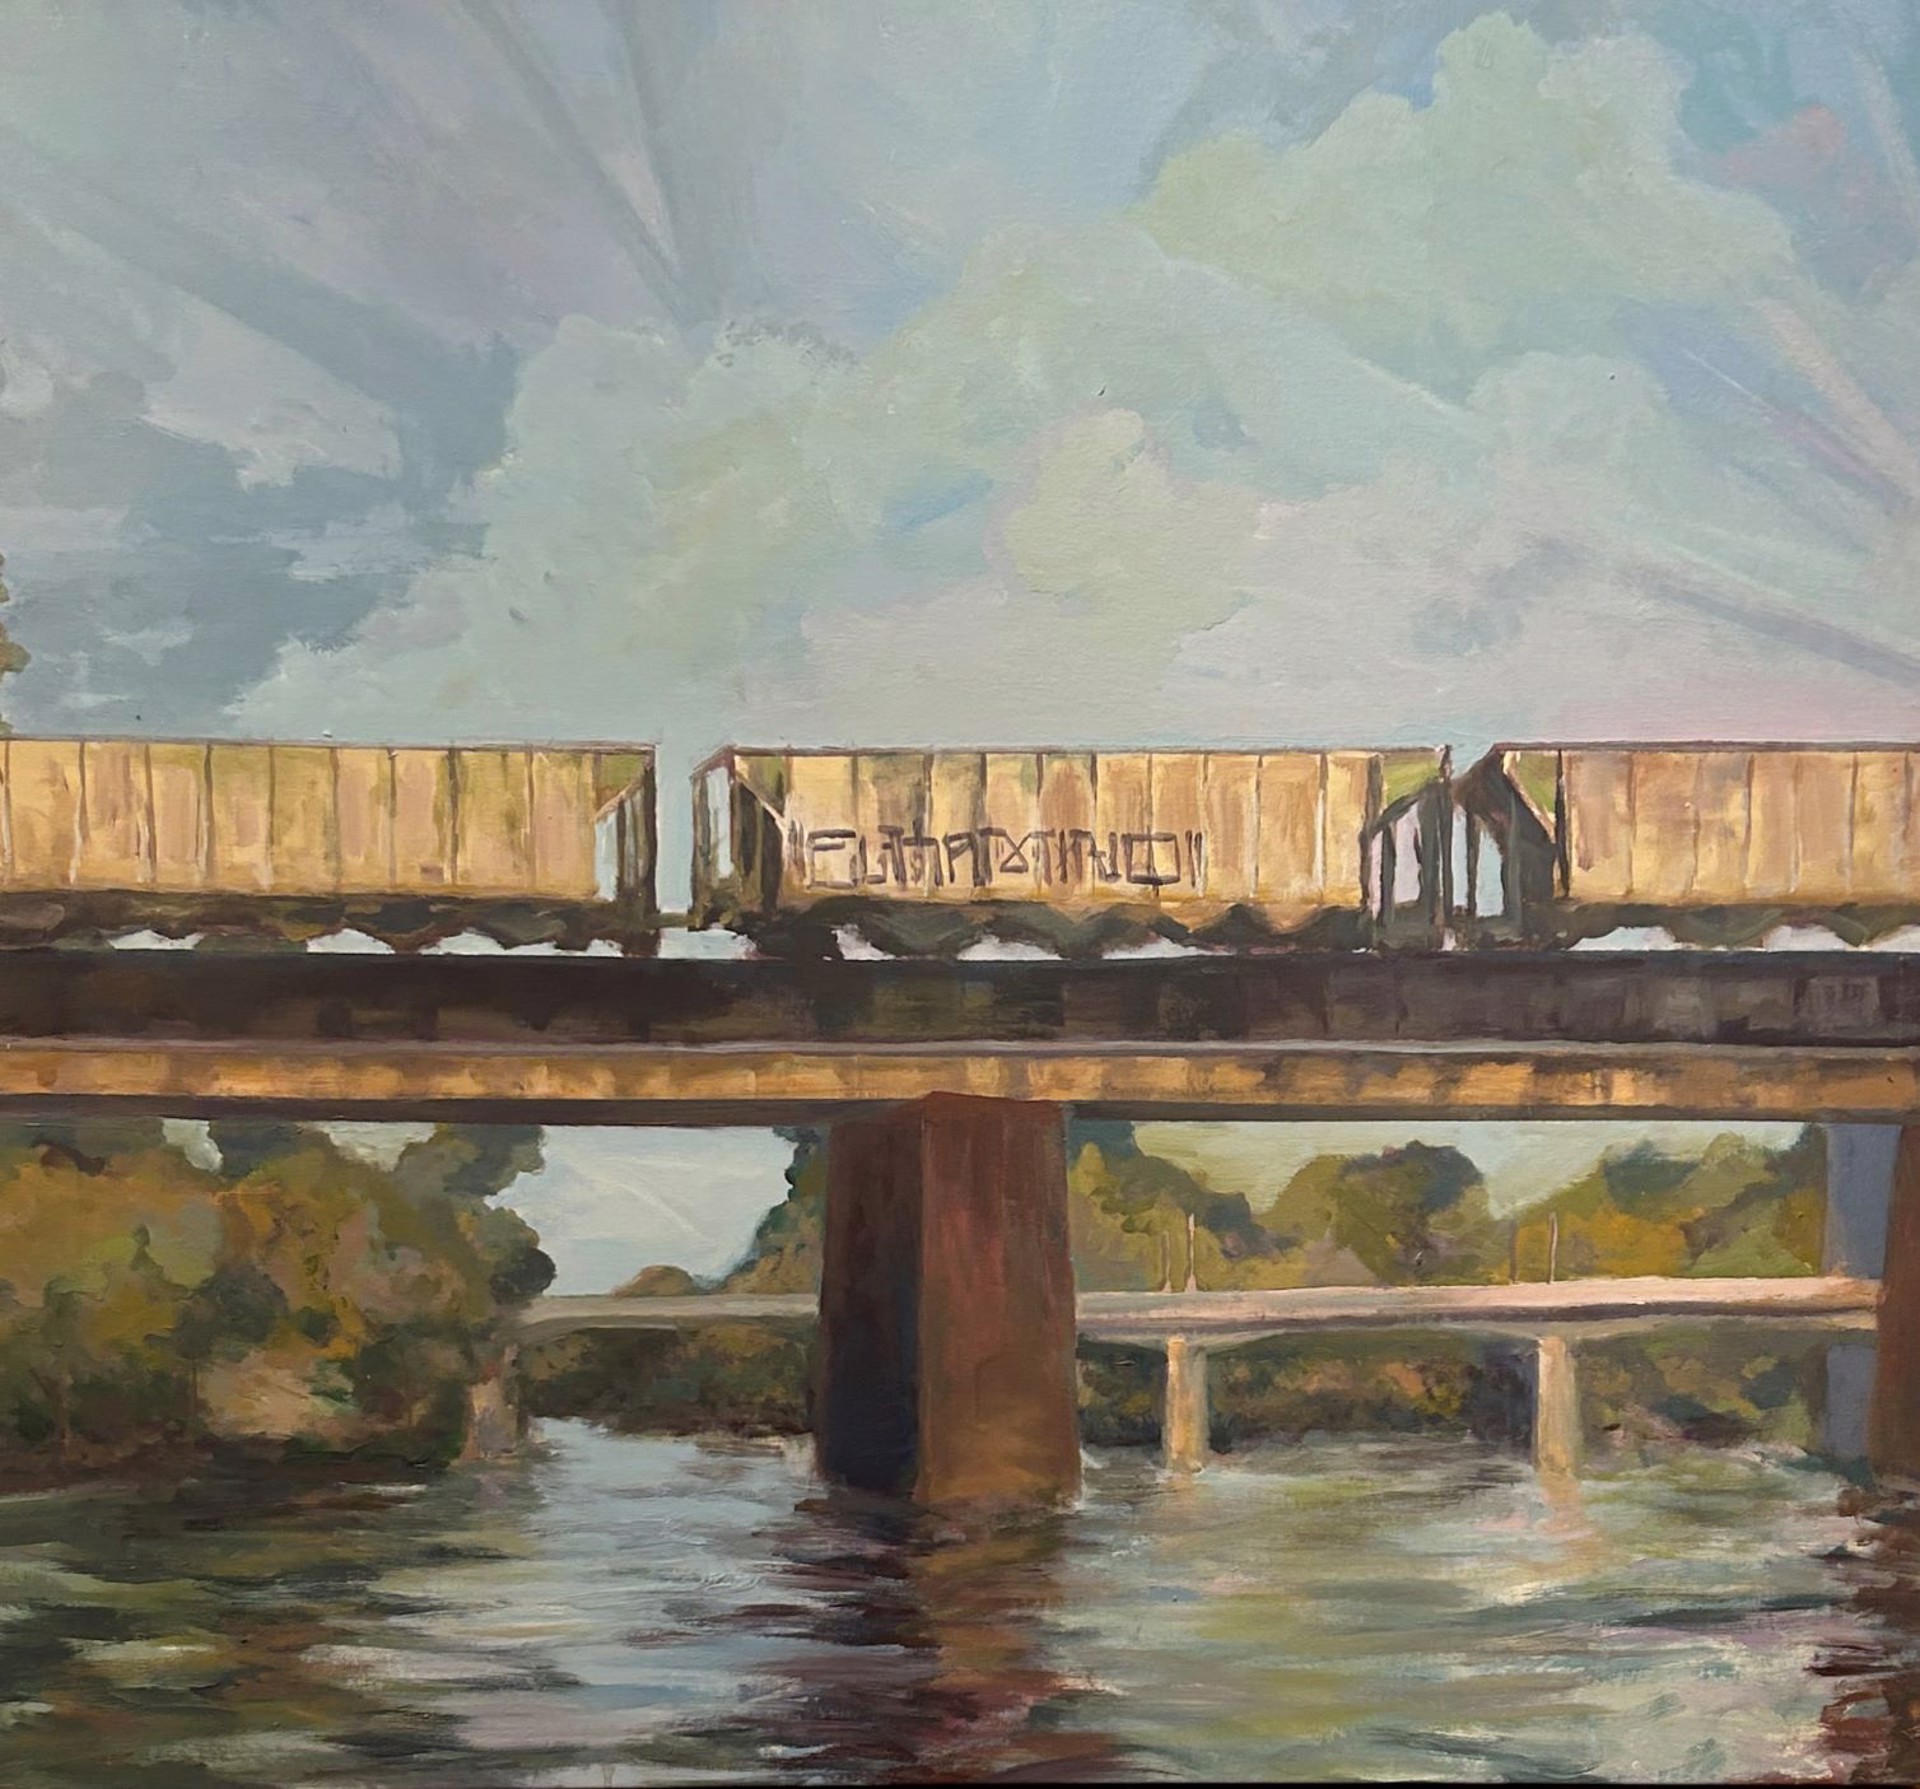 Bridge Study #3 by Ed Trask